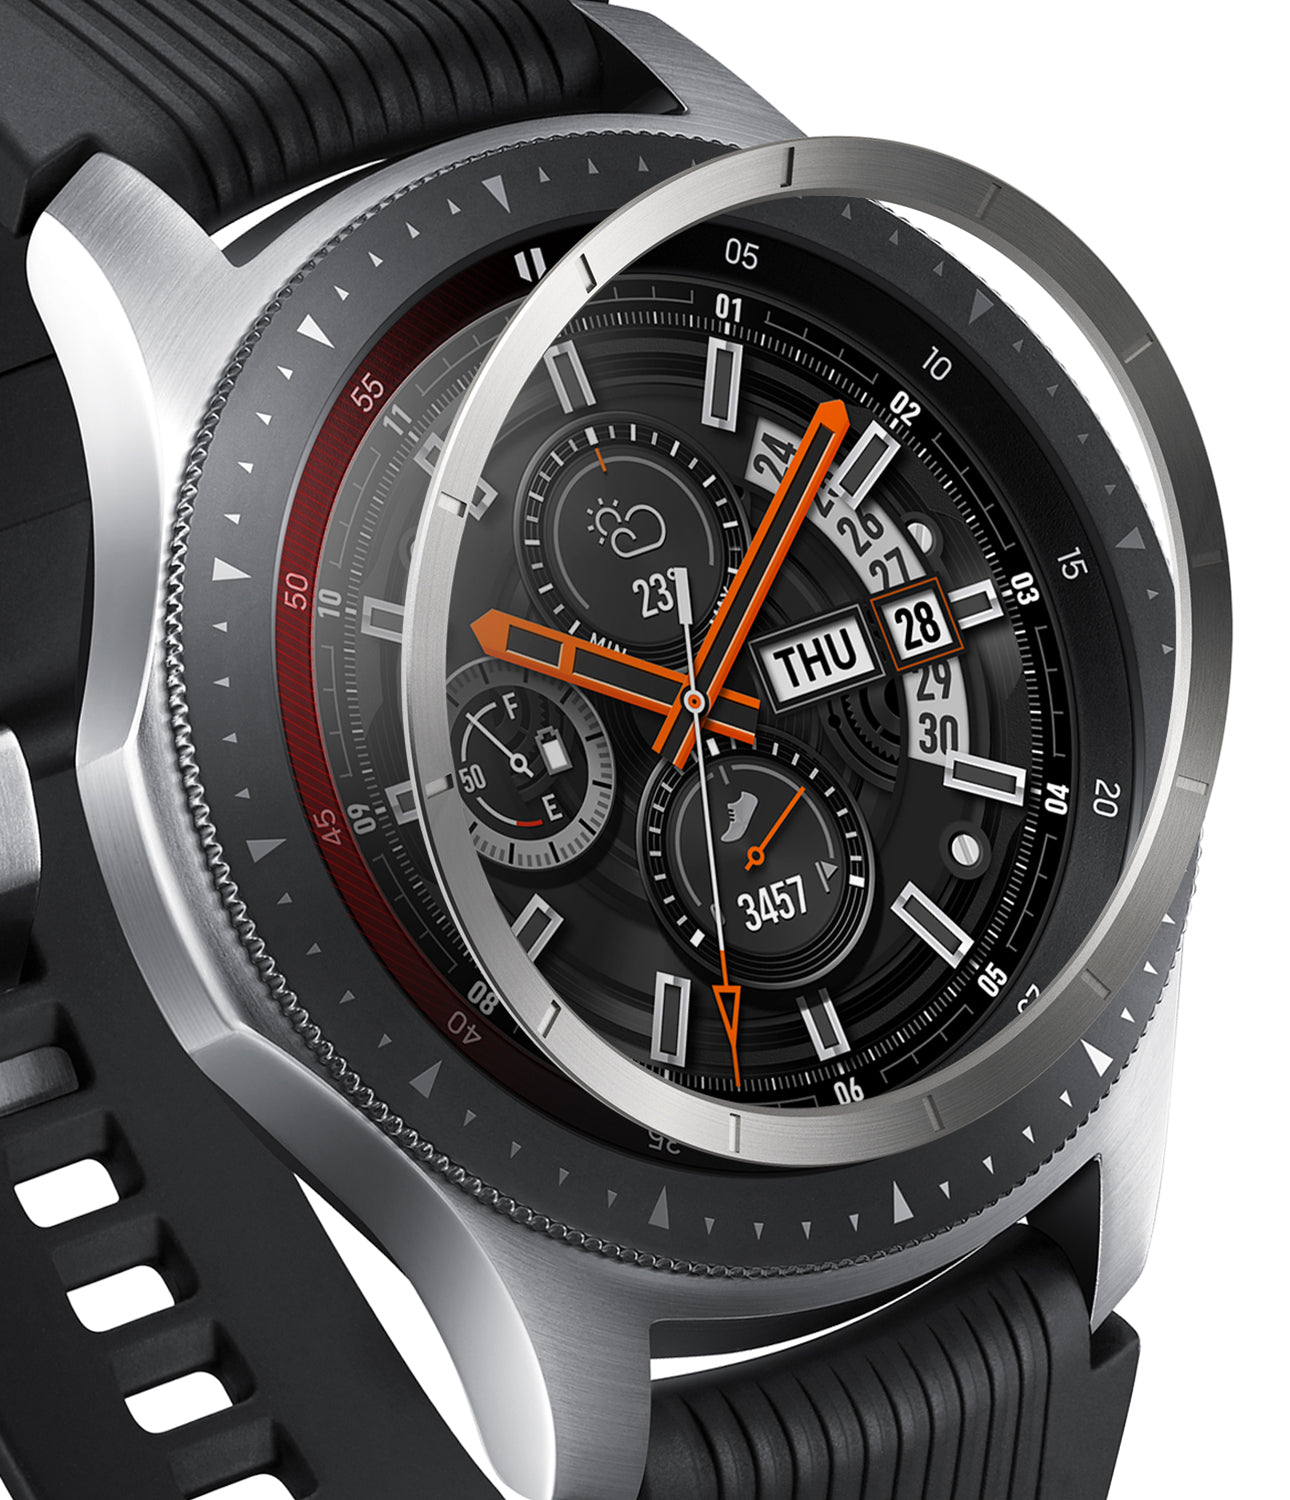 Ringke Inner Bezel Styling for Galaxy Watch 46mm, Gear S3 Frontier, and Gear S3 Classic, GW-46-IN-03, STAINLESS STEEL